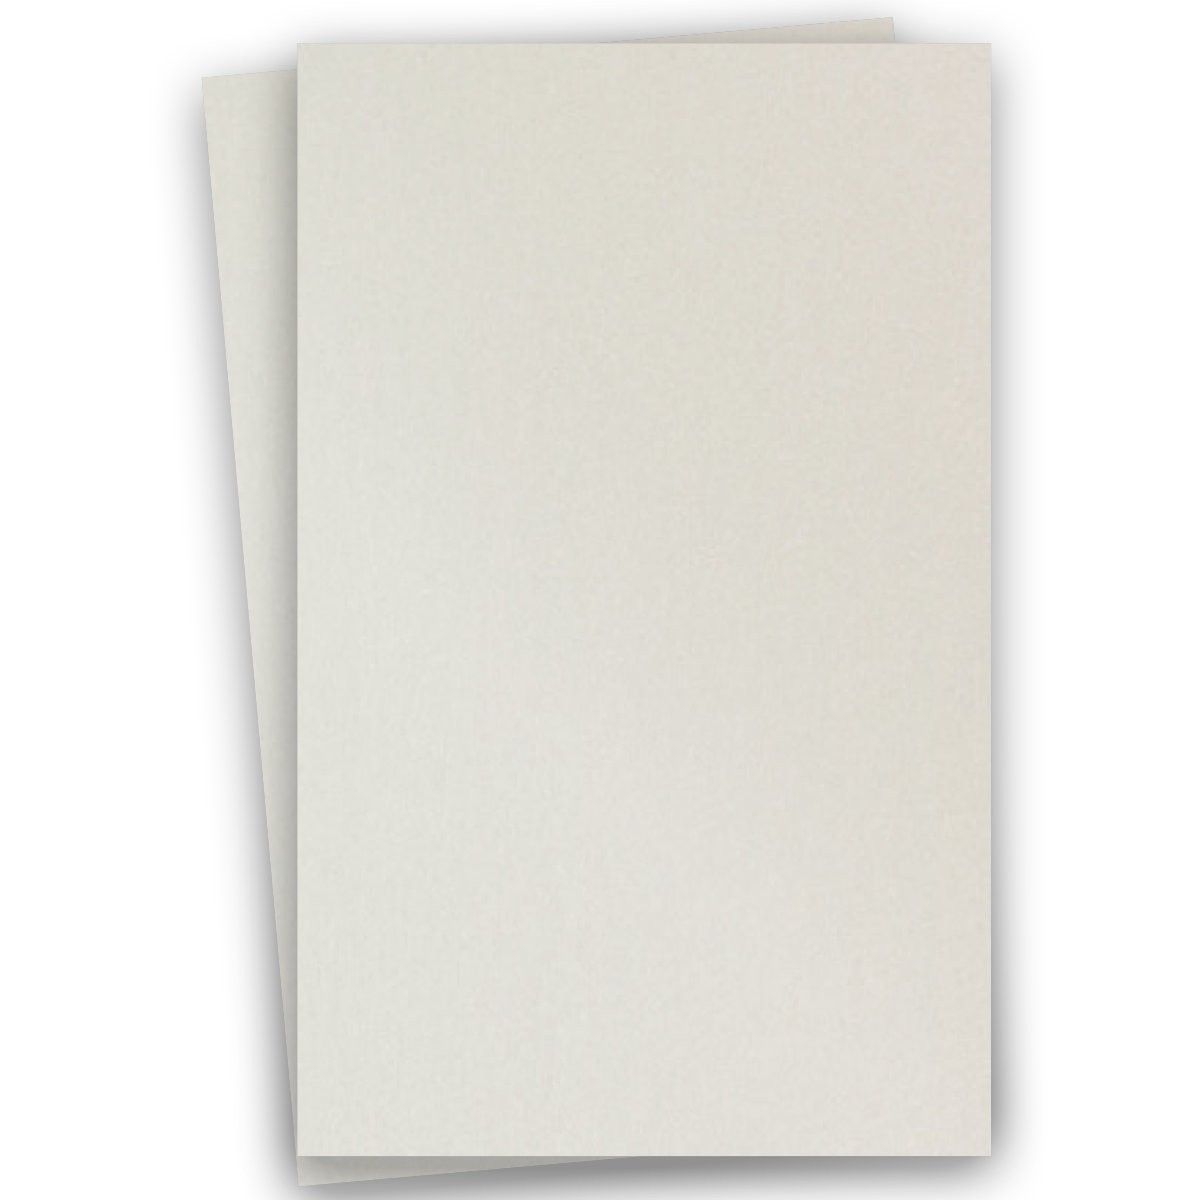 Stardream Metallic - 12X12 Card Stock Paper - SILVER - 105lb Cover (284gsm)